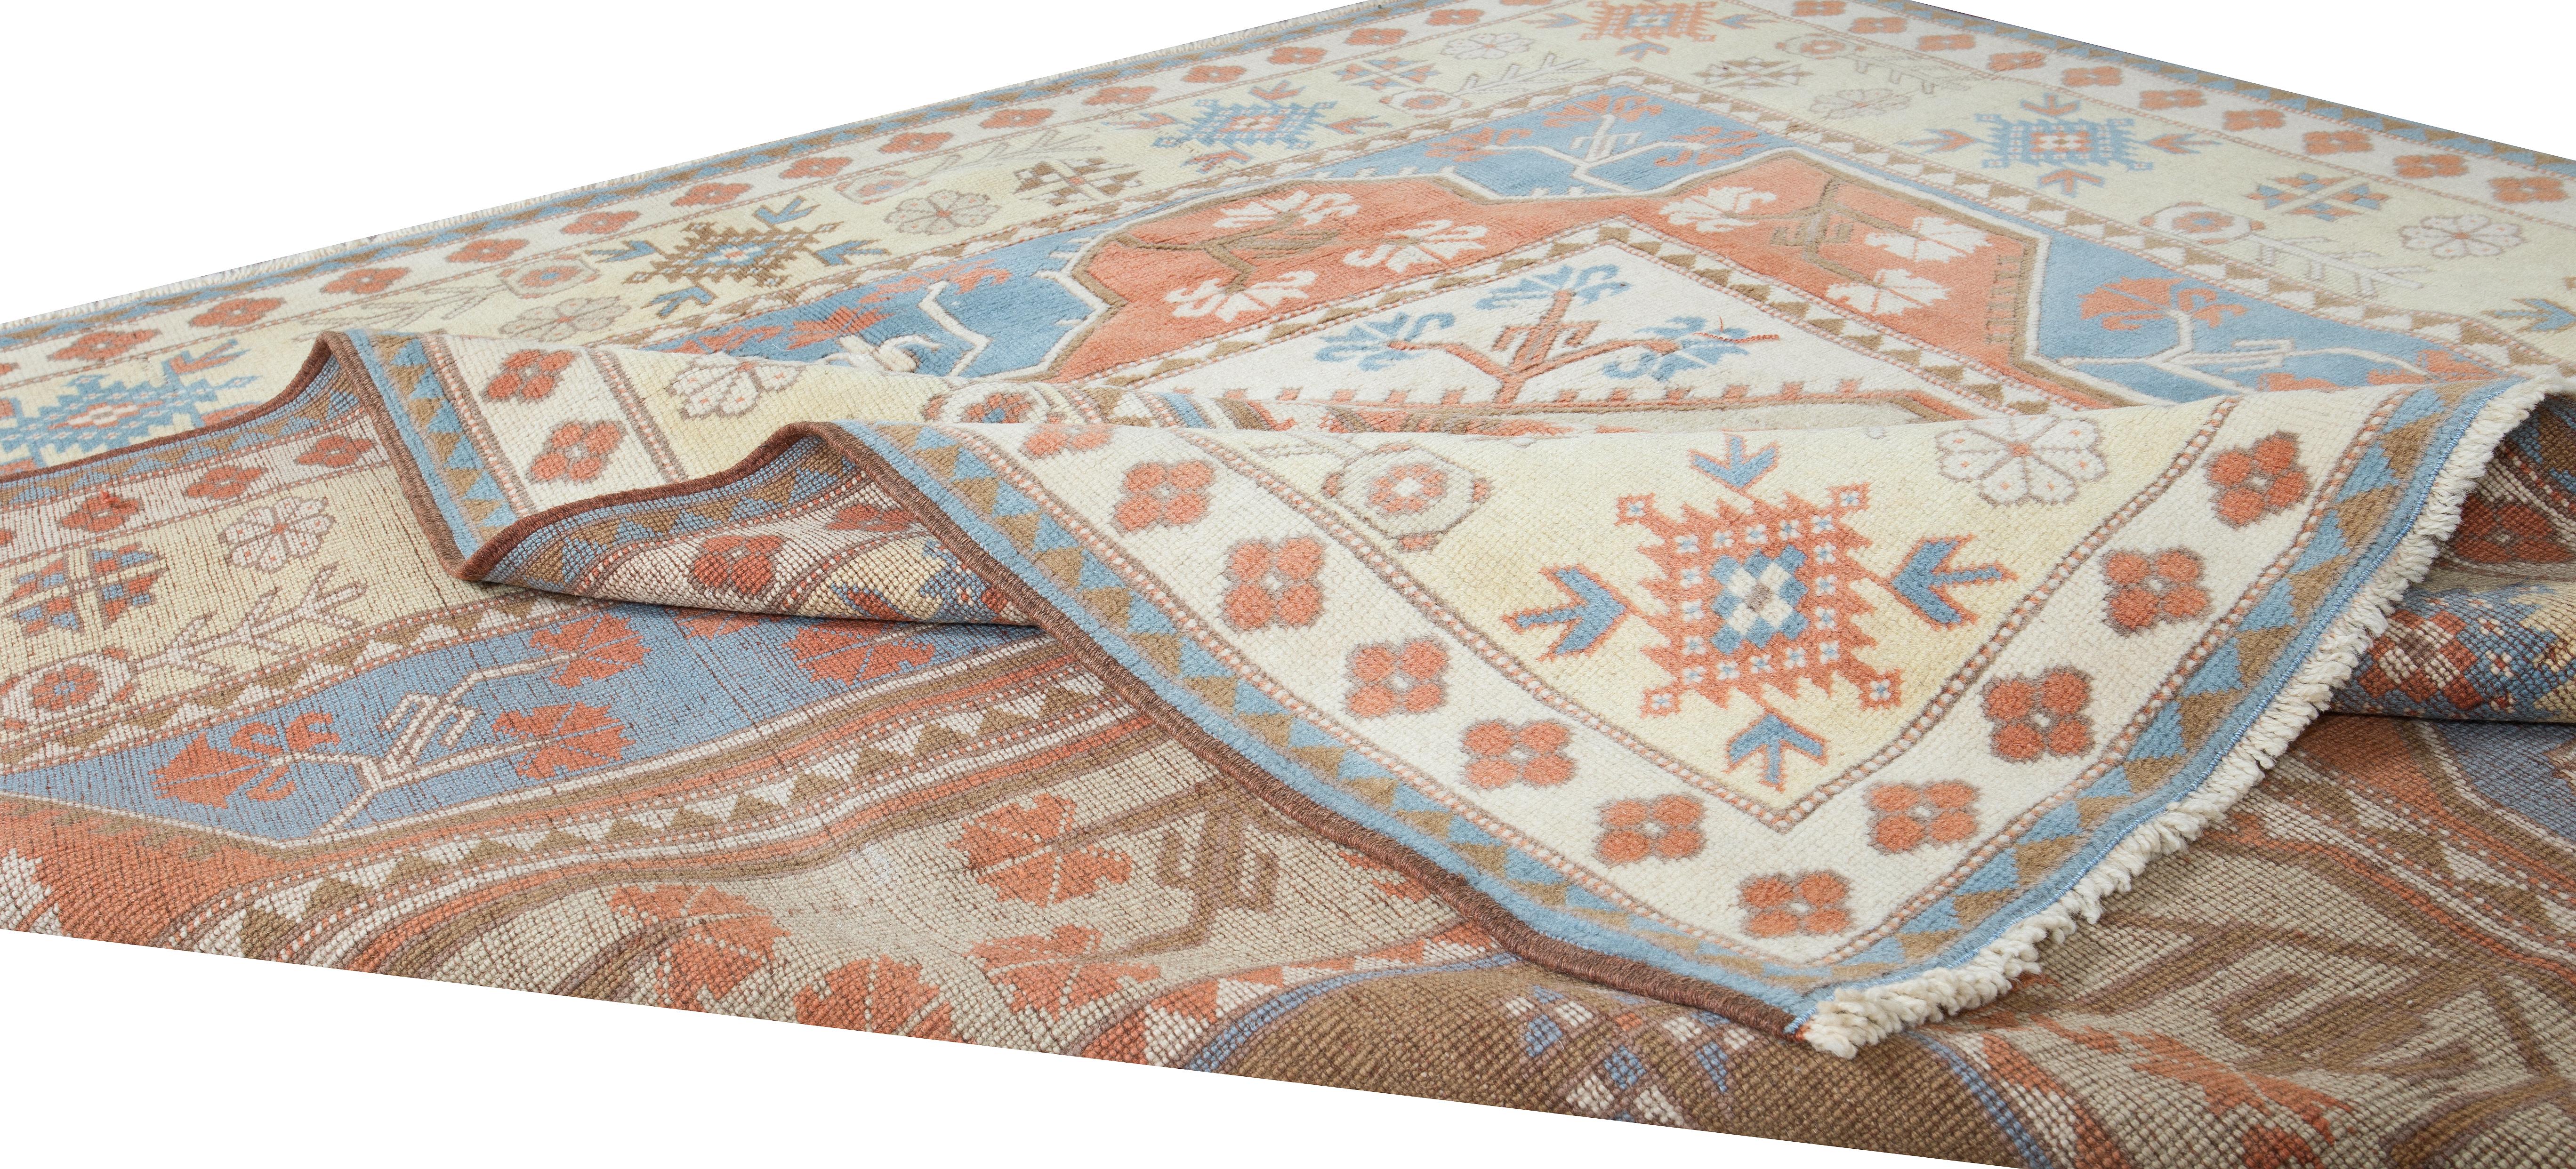 Tribal 6.5x6.6 Ft Rare Size Handmade Turkish Rug, Vintage Geometric Unique Carpet For Sale